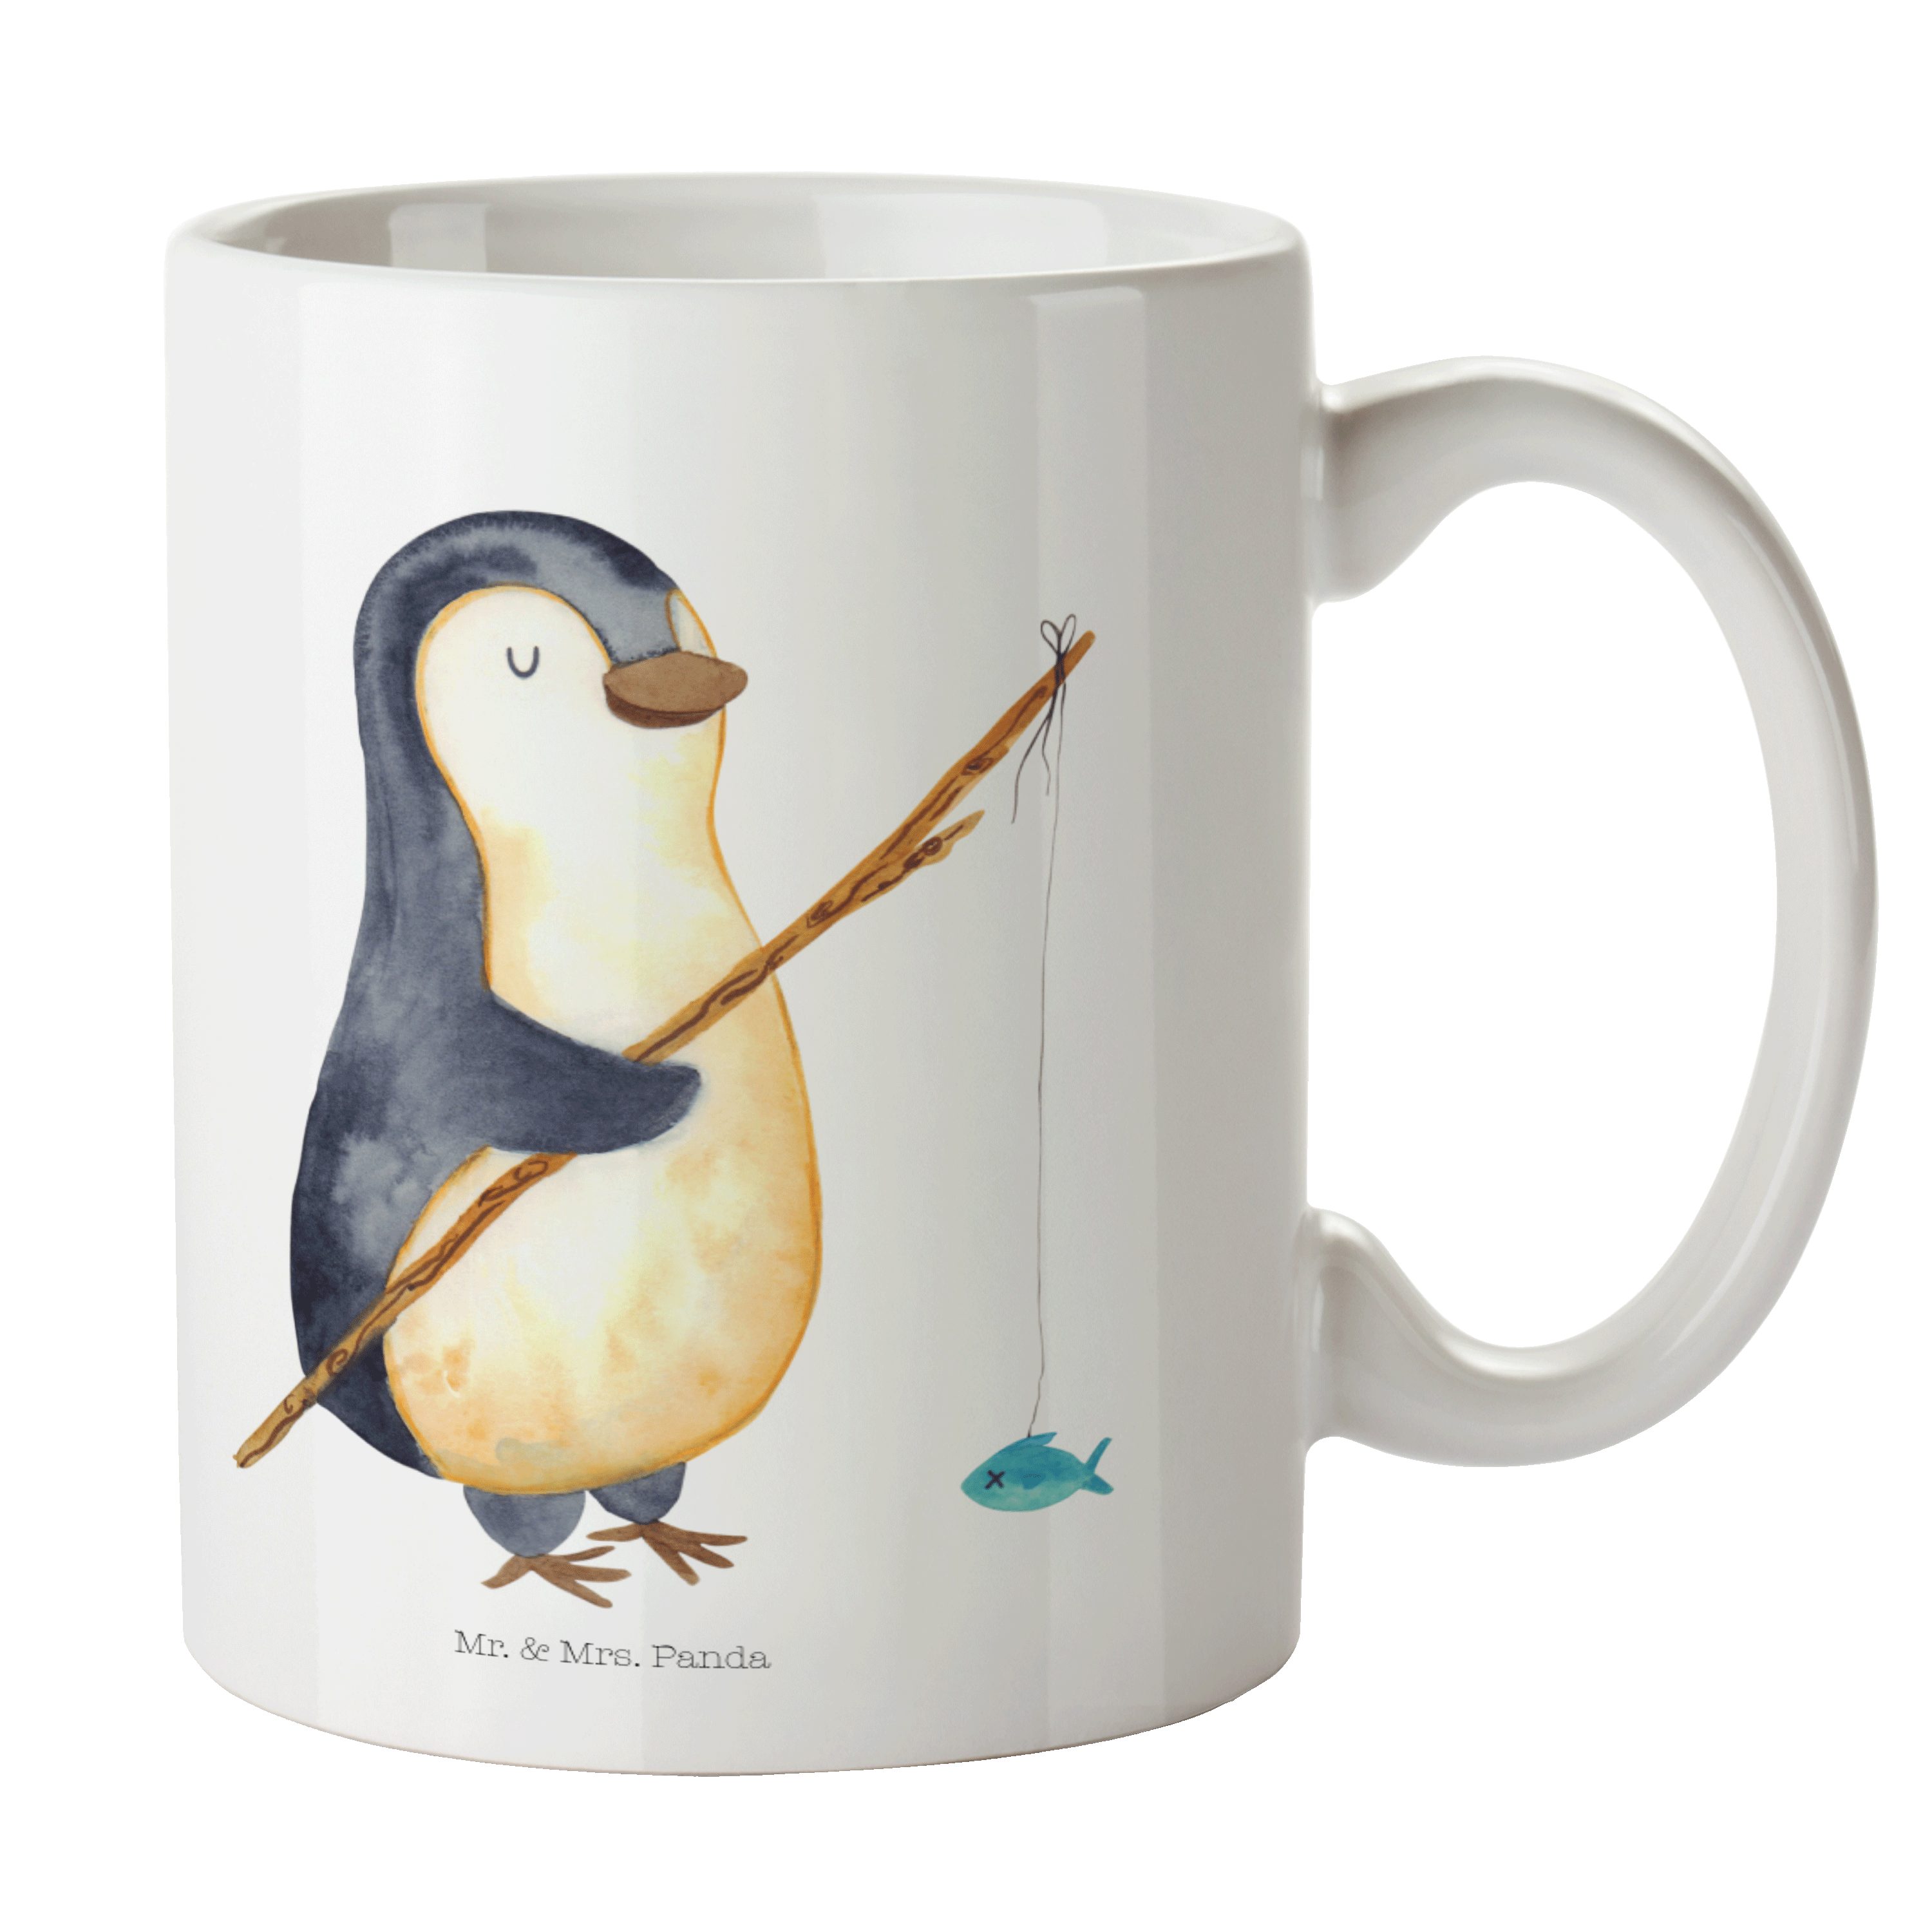 Mr. & Mrs. Panda Tasse Pinguin Angler - Weiß - Geschenk, Keramiktasse, Kaffeebecher, Seevoge, Keramik | Tassen